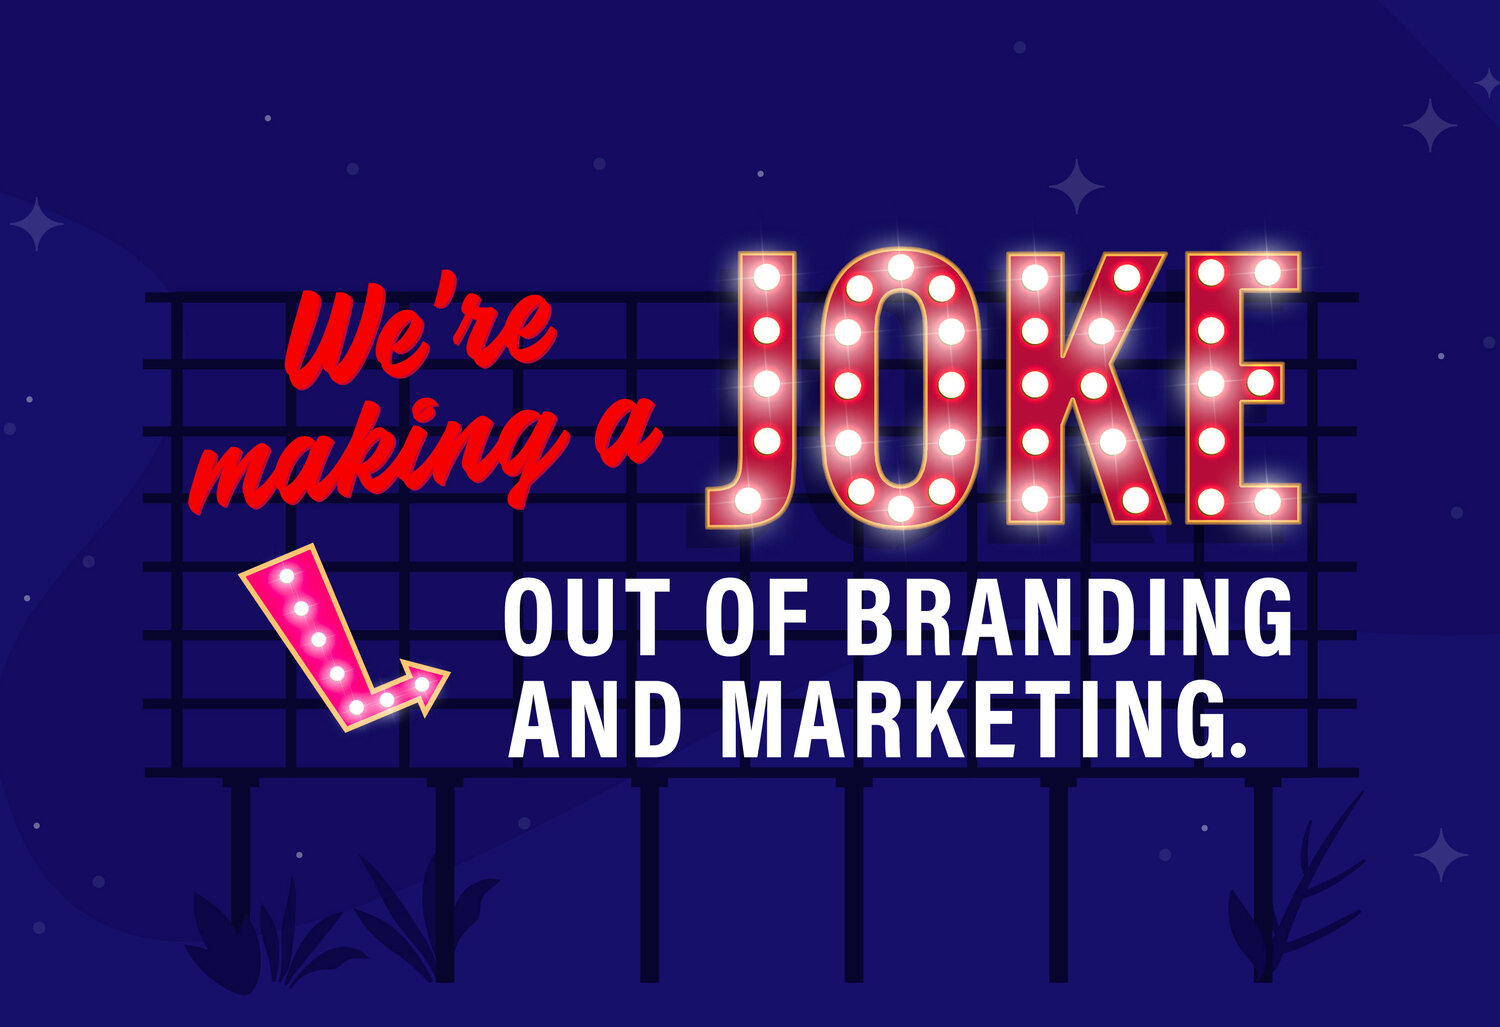 Obedient | Humor Branding & Marketing Agency